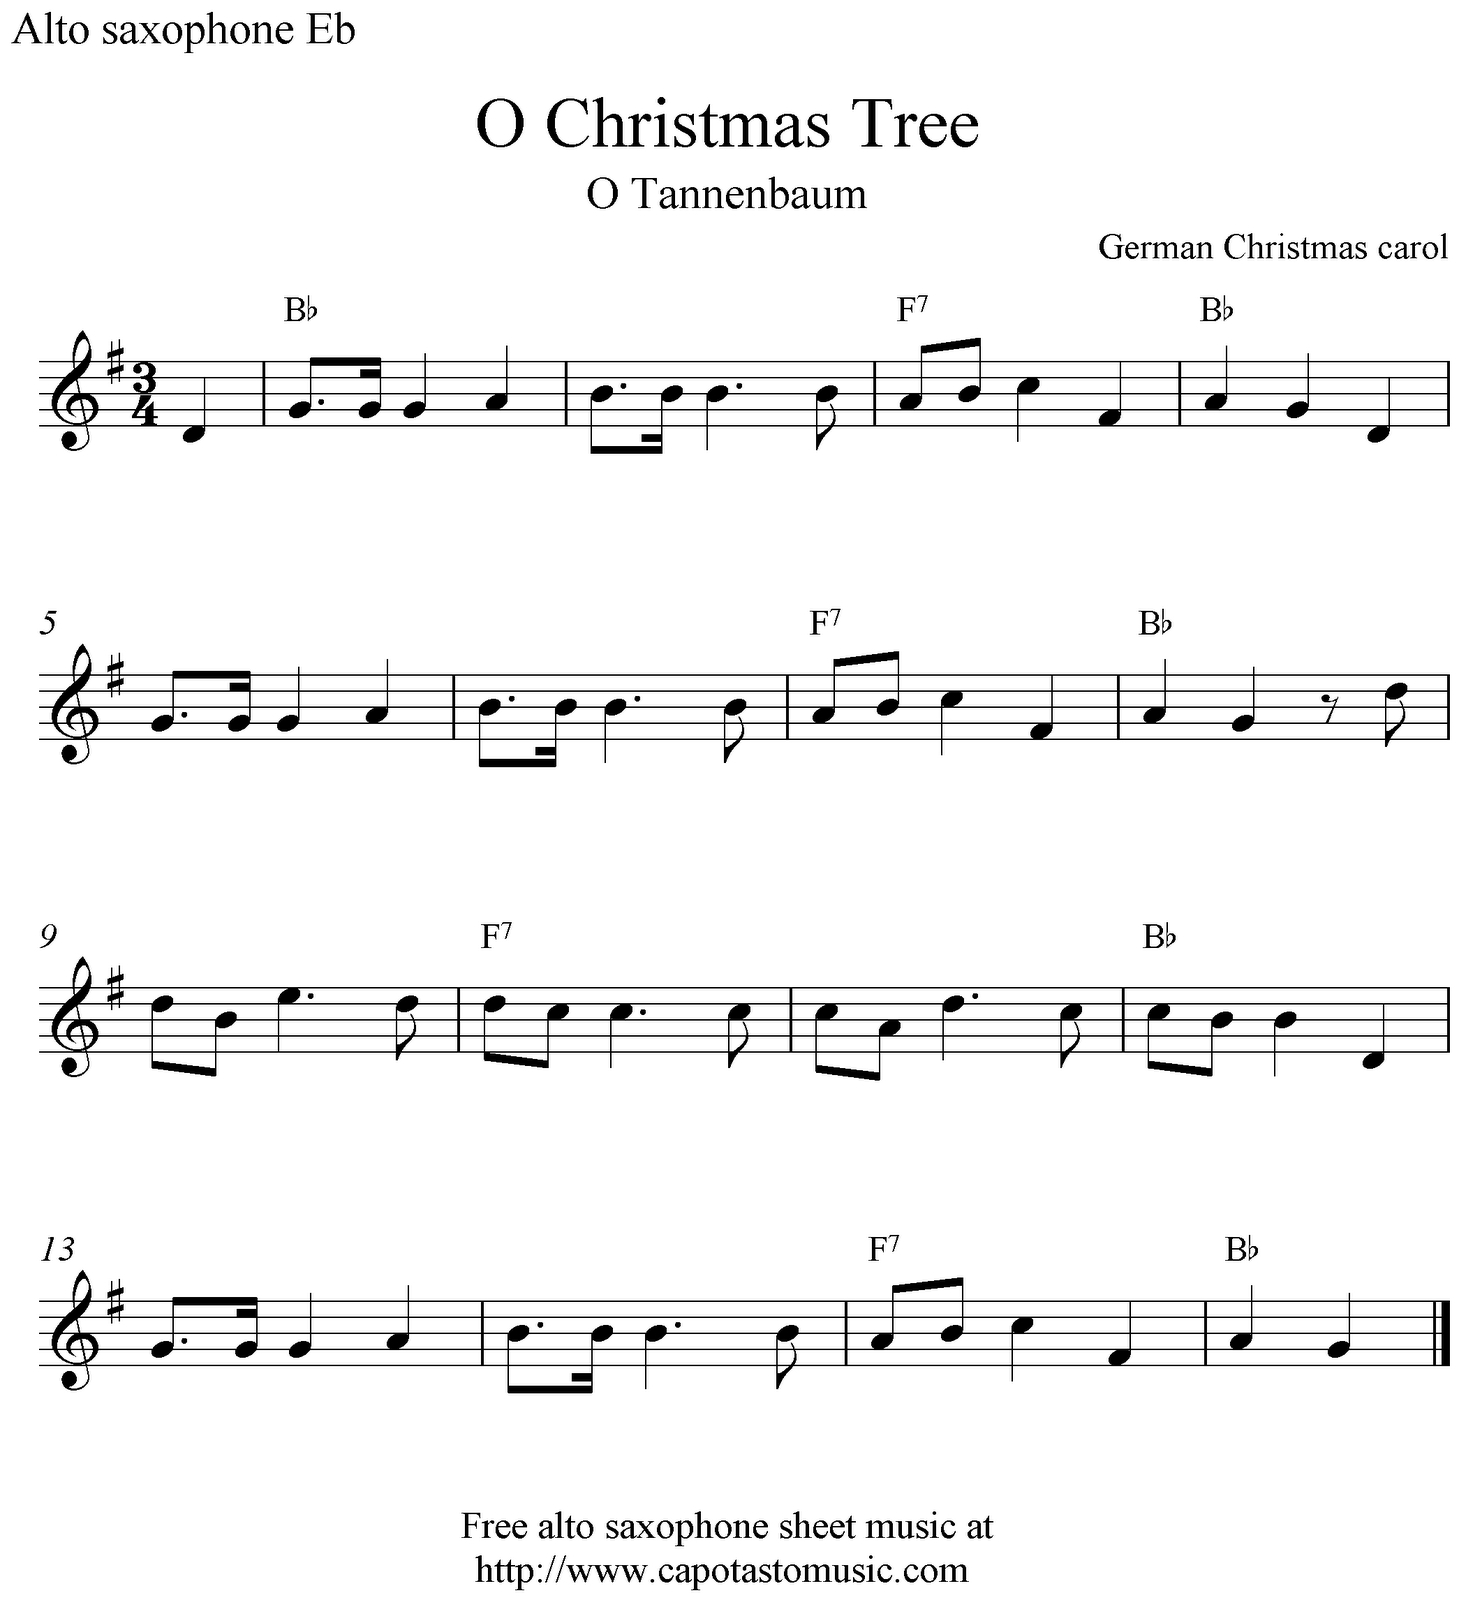 free-printable-christmas-sheet-music-for-alto-saxophone-free-printable